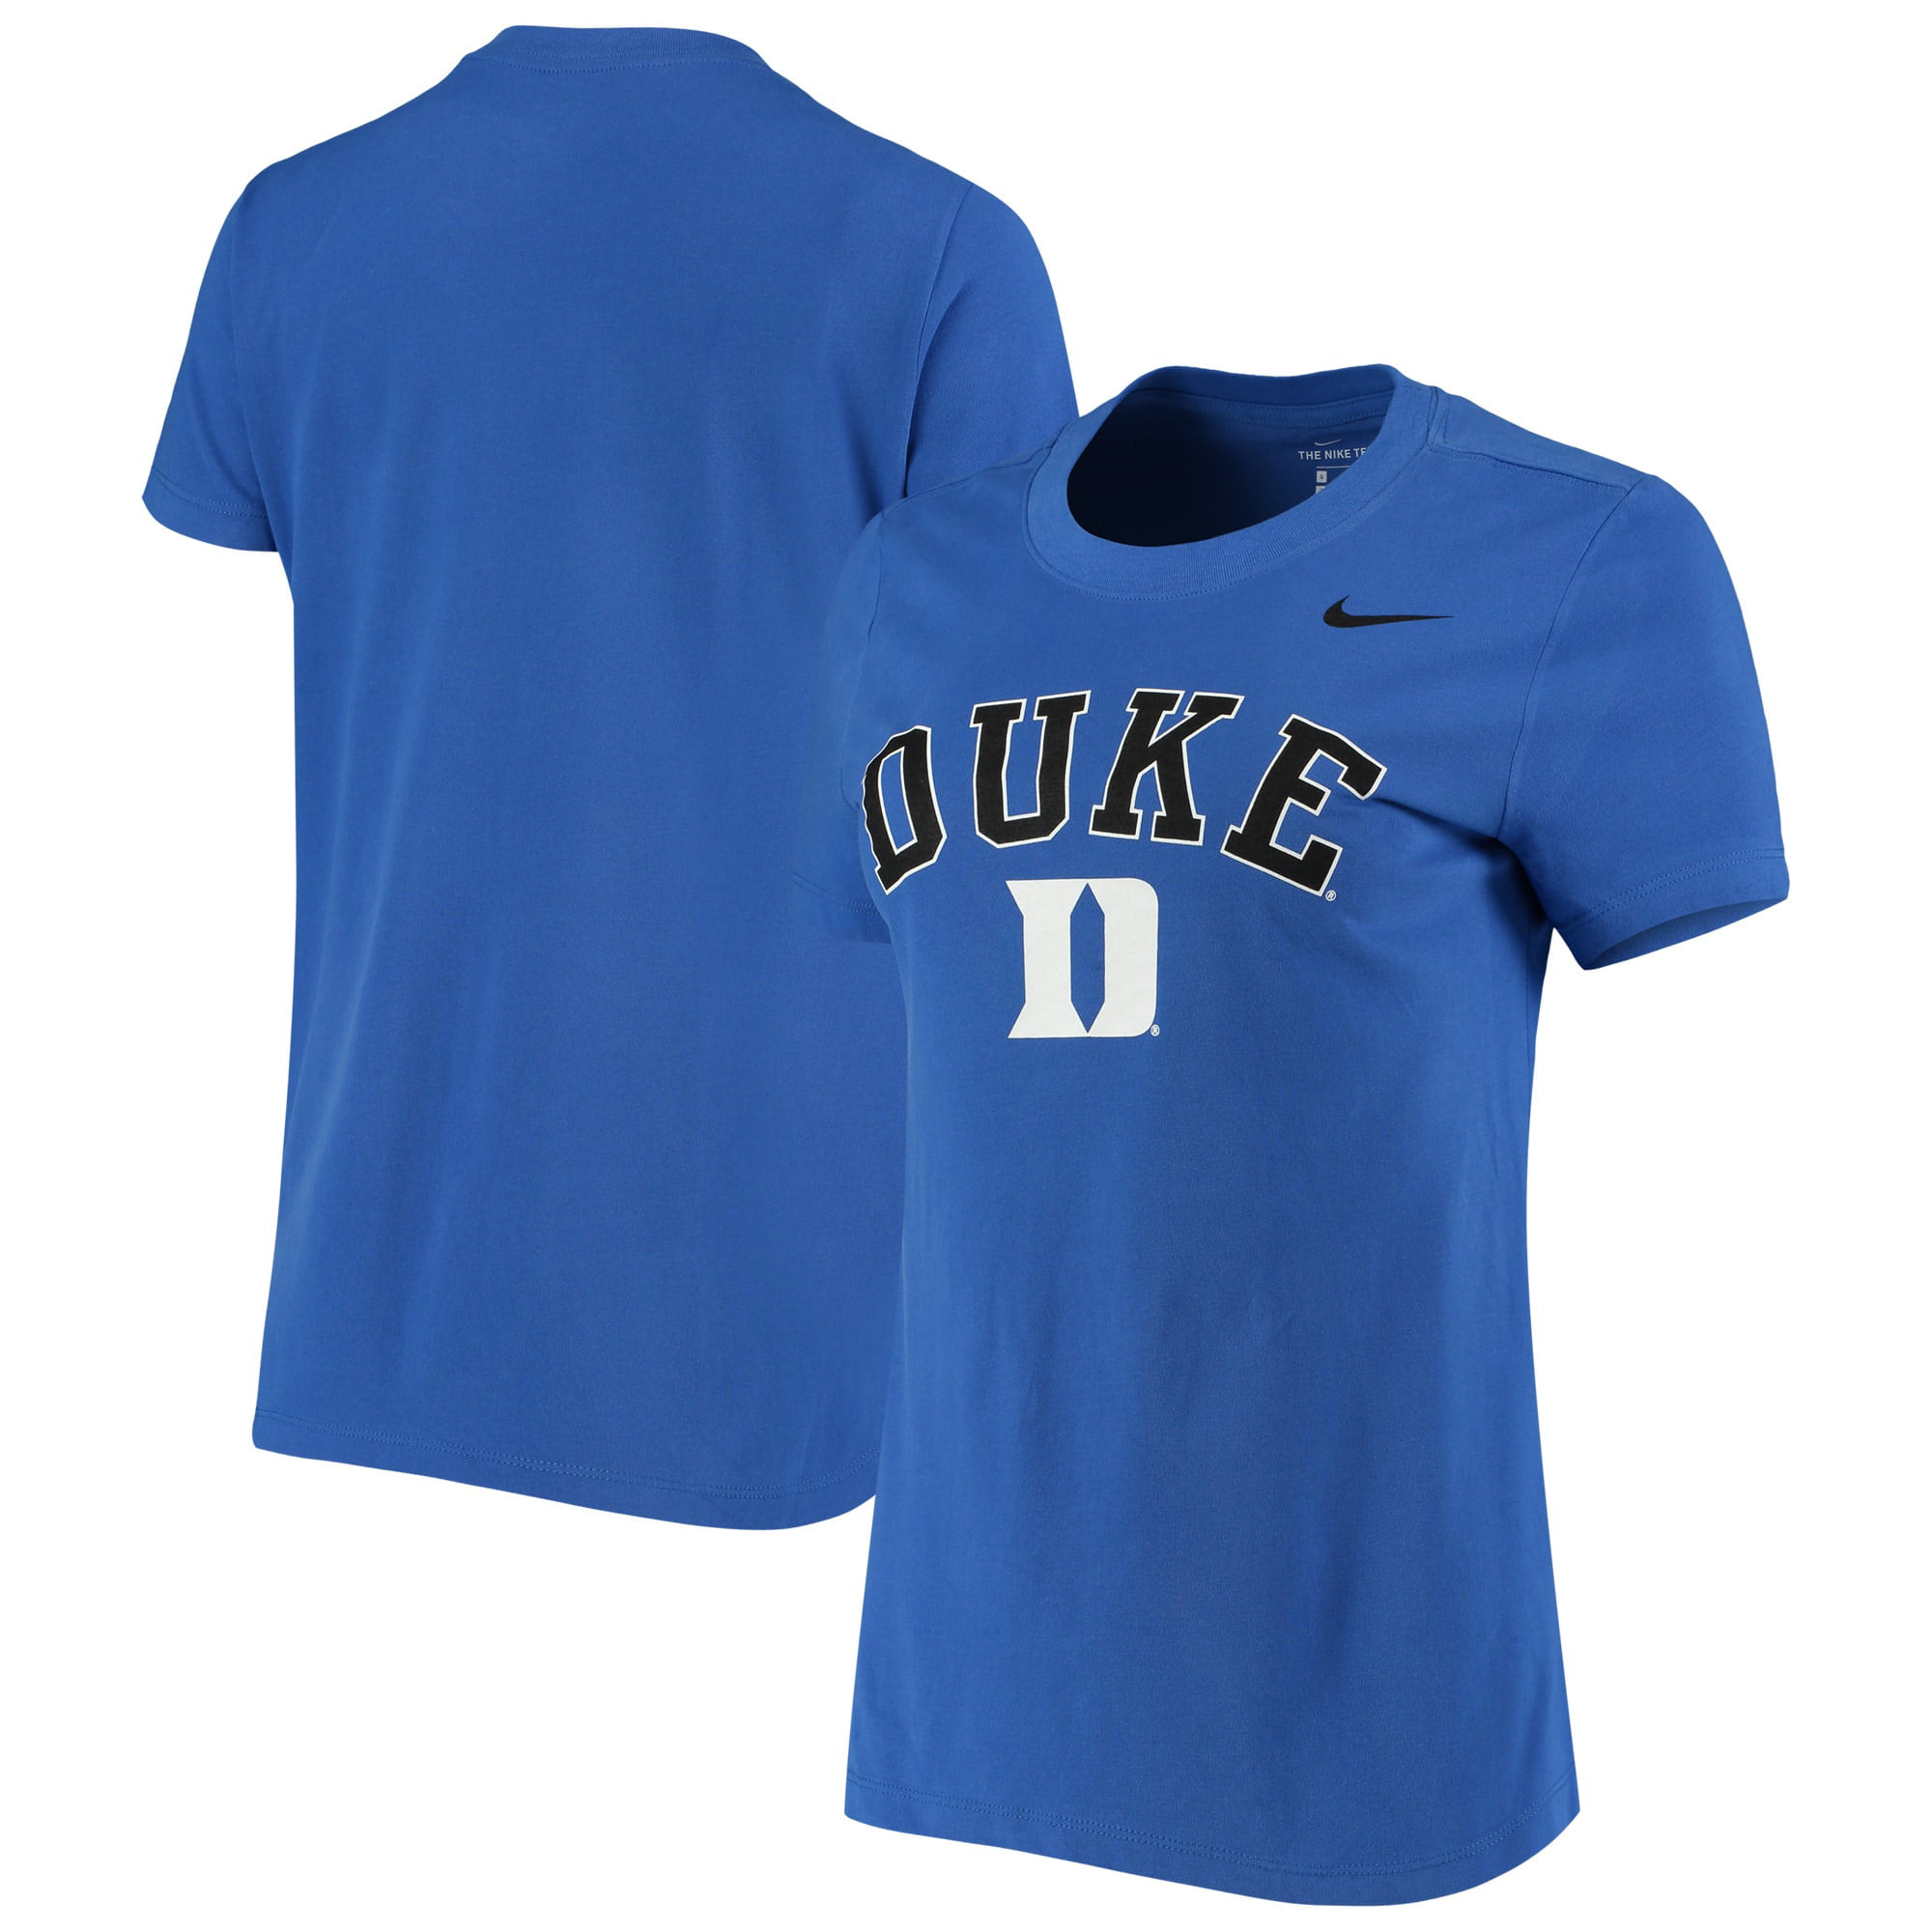 Duke Blue Devils Dog Shirt X-Small 